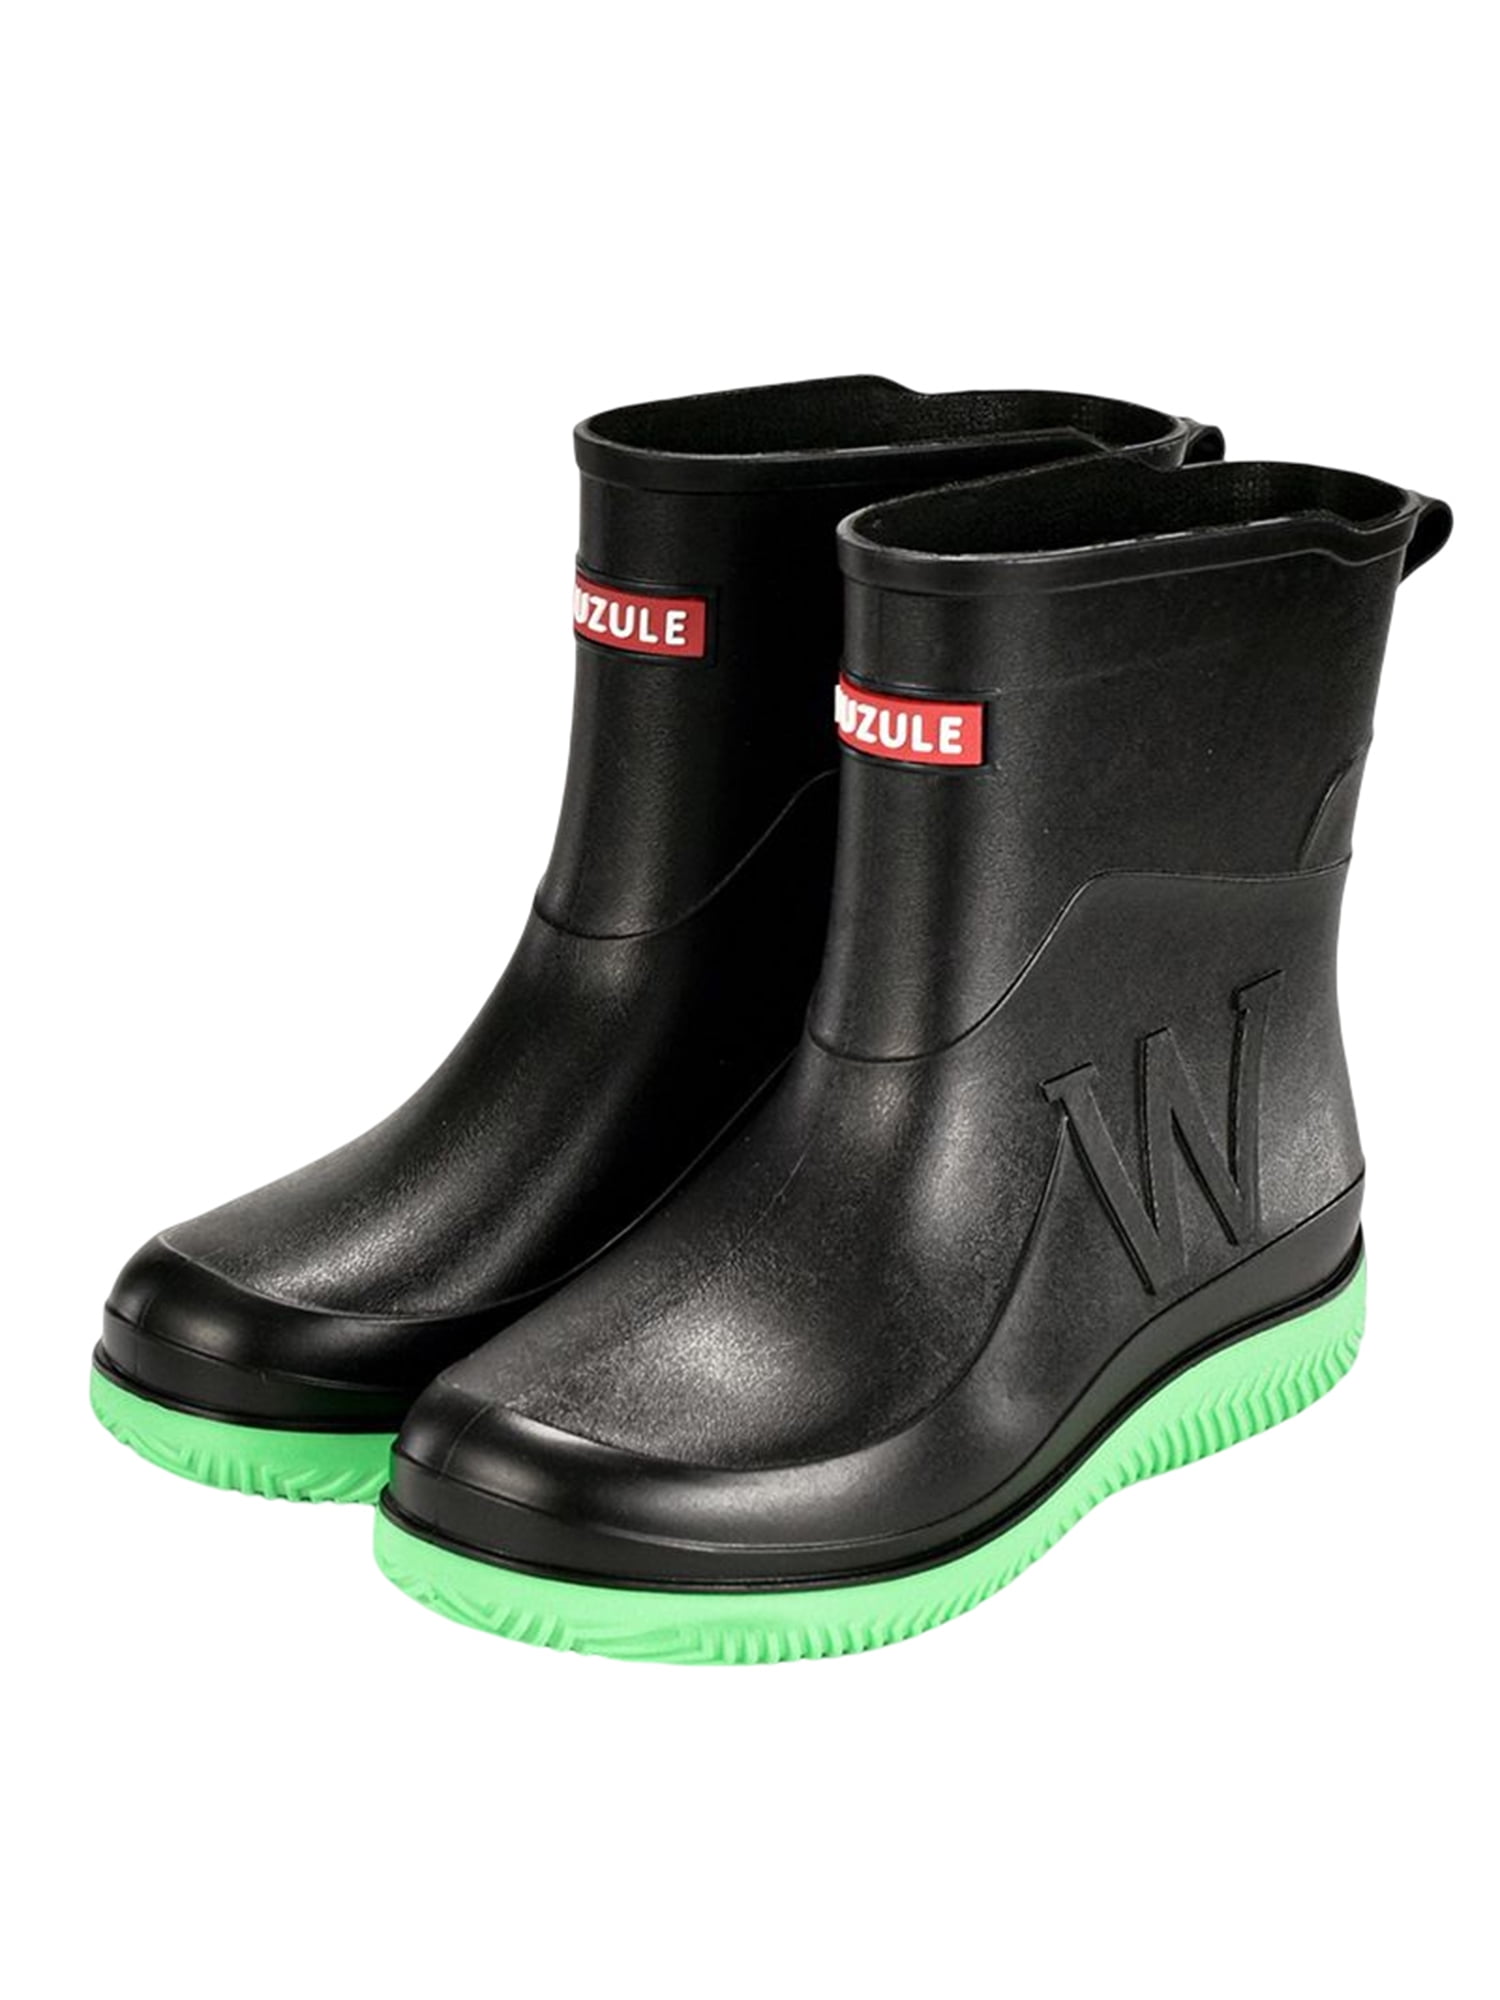 Mens Rain Boots Slip On Waterproof Rubber Rain Shoes,Work Mud Boots  ,Durable Non-Slip Garden Boots For Farming Gardening Fishing